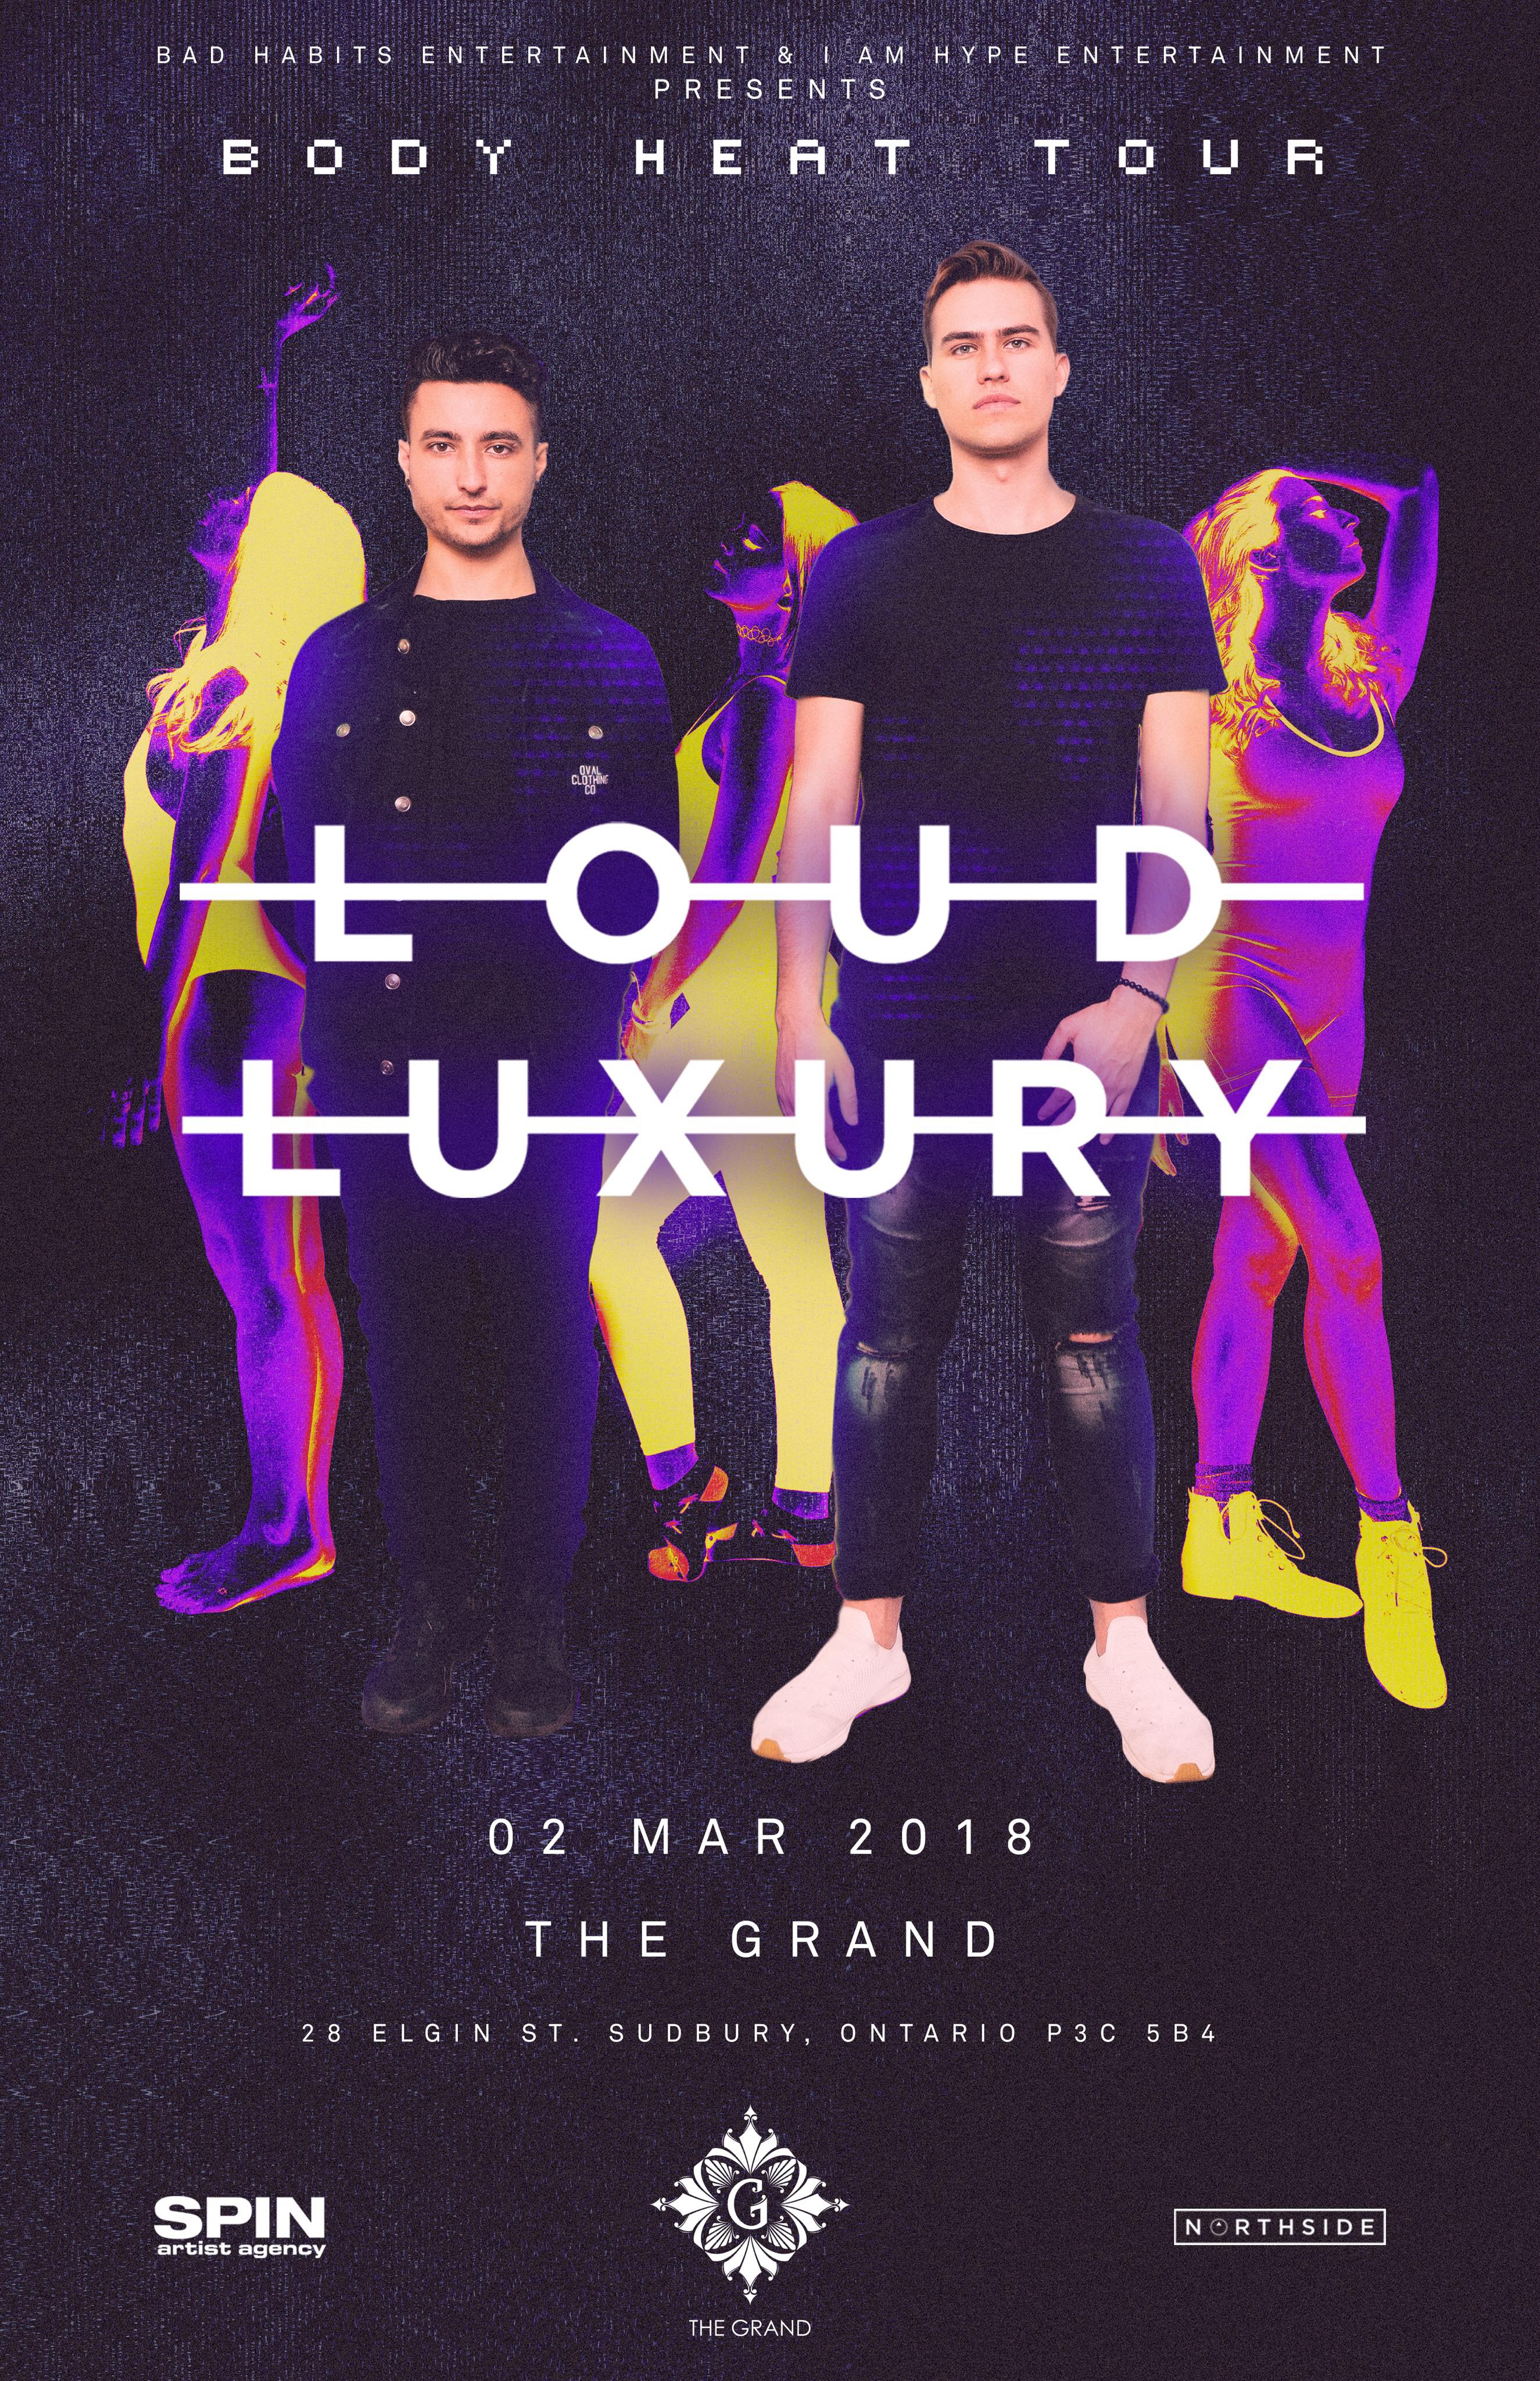 loud luxury tour schedule